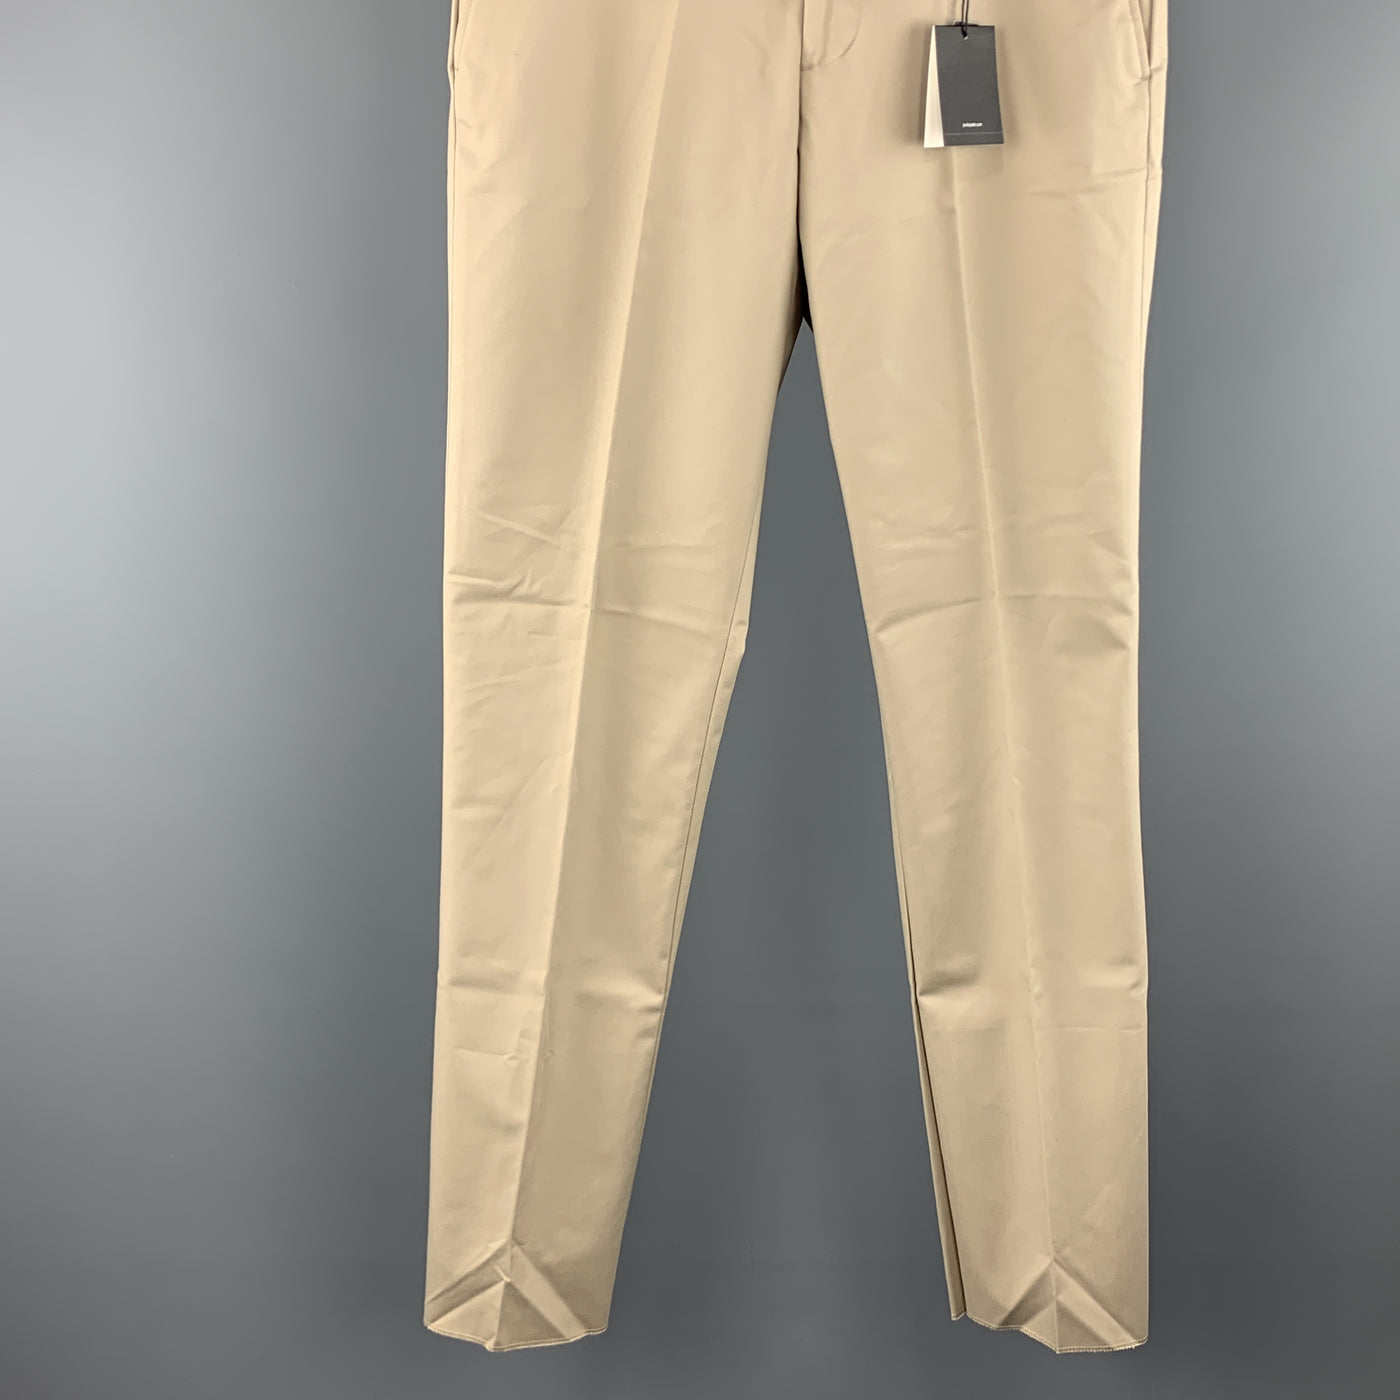 JACK SPADE Size 33 x 34 Khaki Solid Cotton Zip Fly Dress Pants